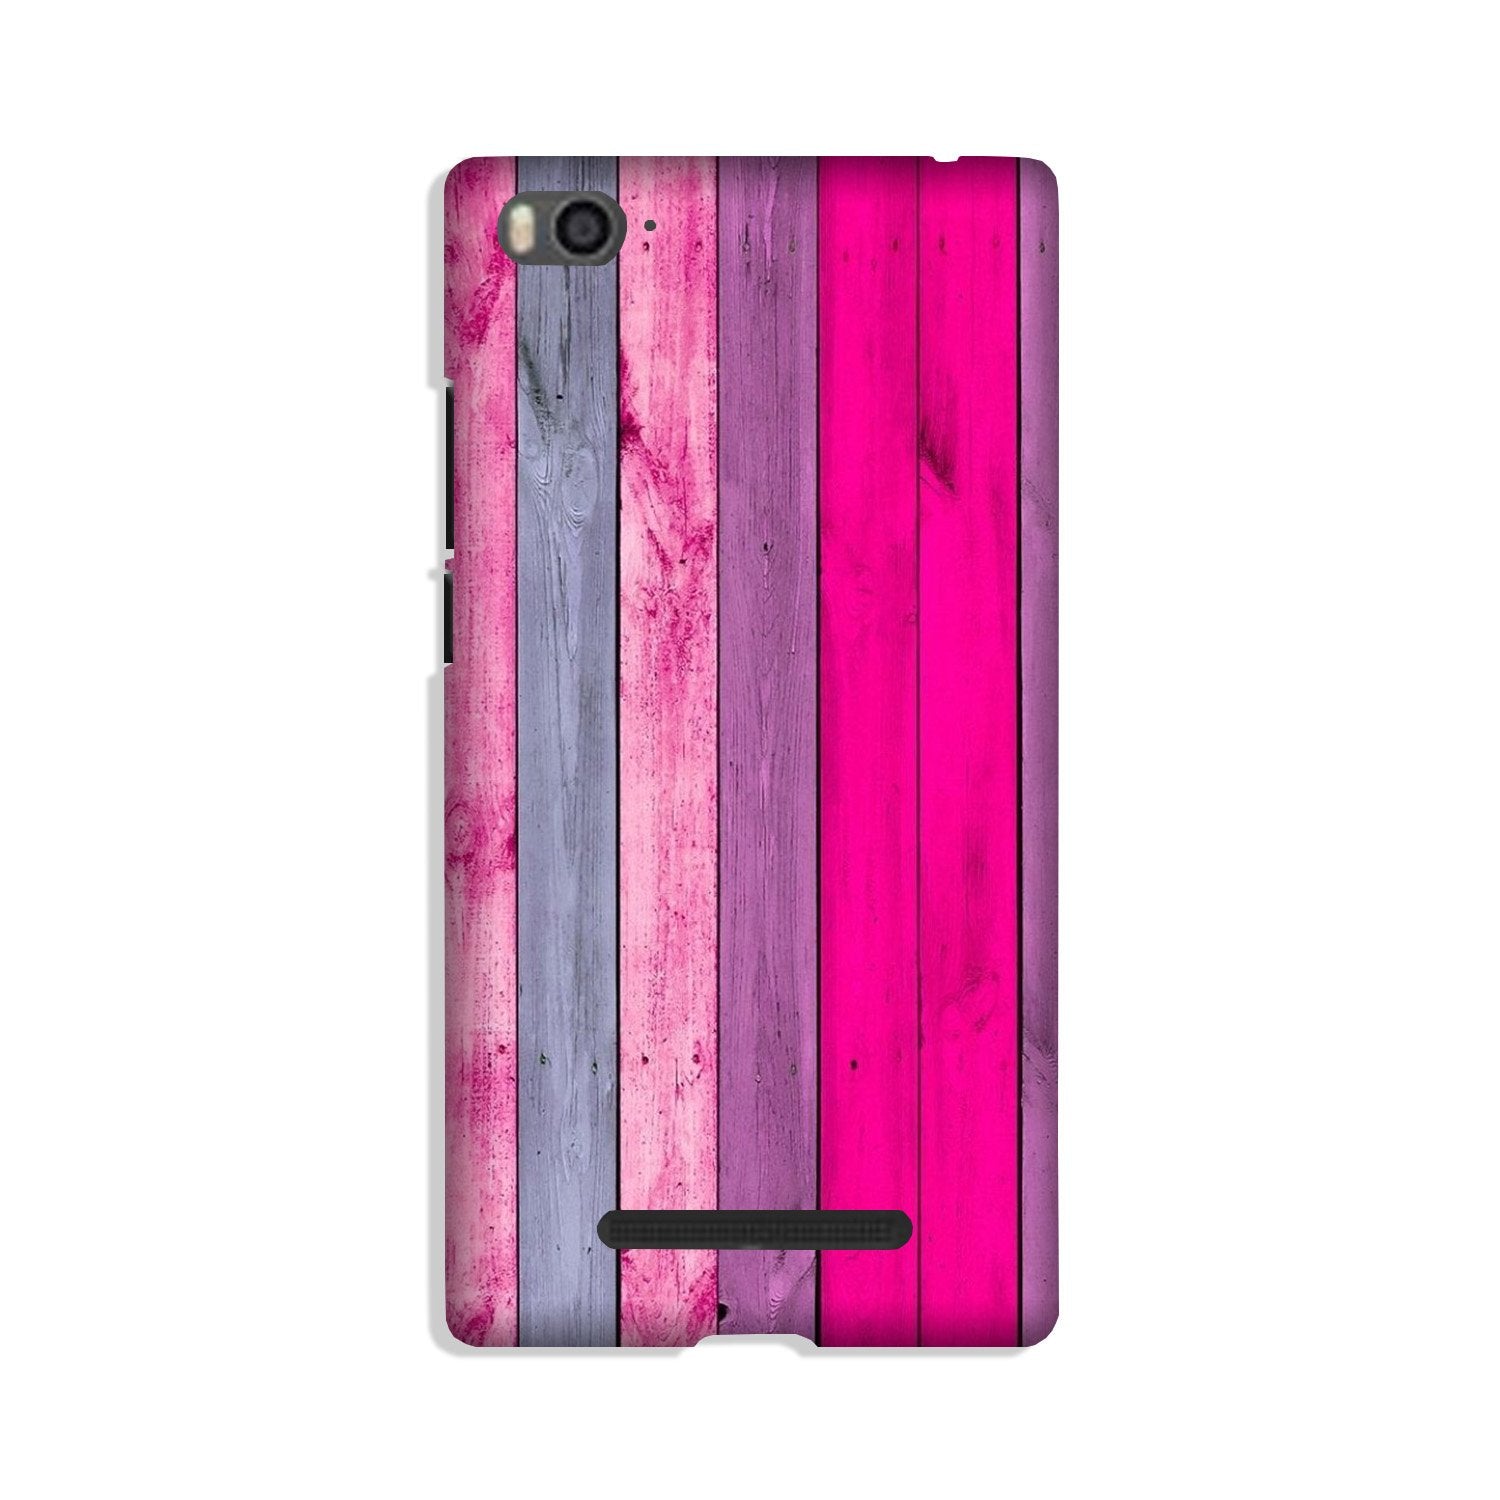 Wooden look Case for Xiaomi Mi 4i